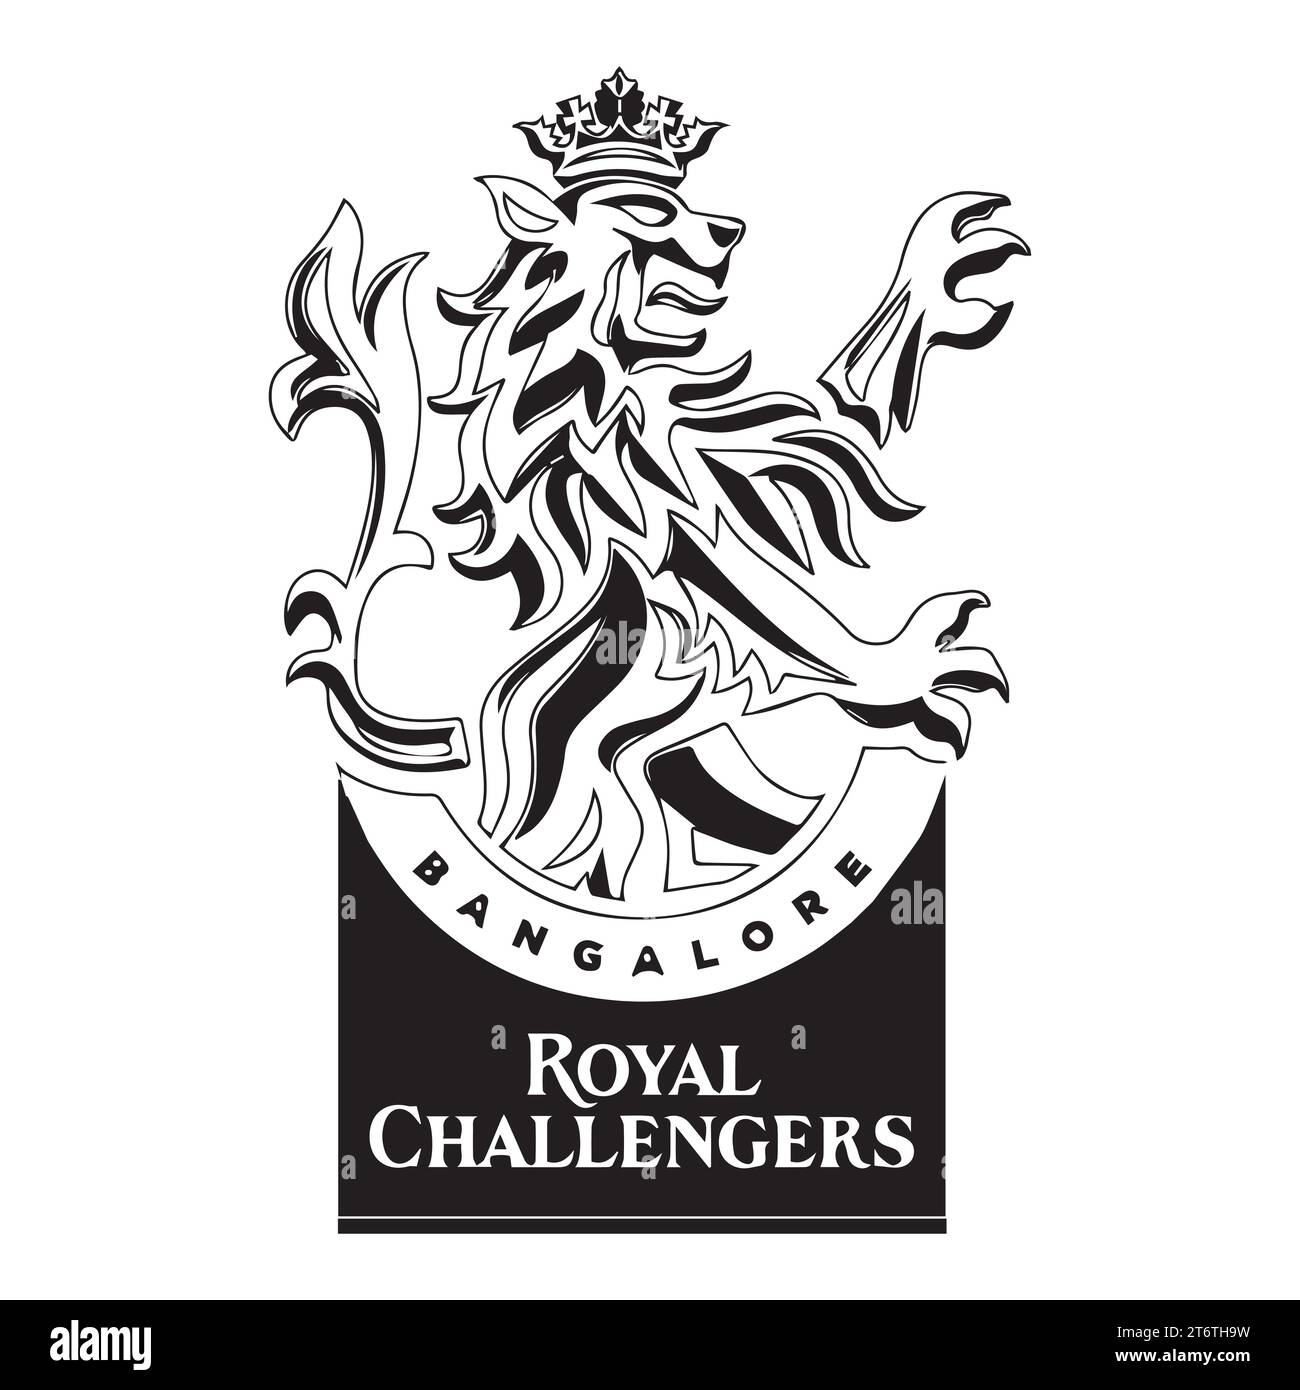 Royal Challengers Bangalore Logo Black Style indischer professioneller Cricket Club, Vektor-Illustration abstraktes bearbeitbares Bild Stock Vektor